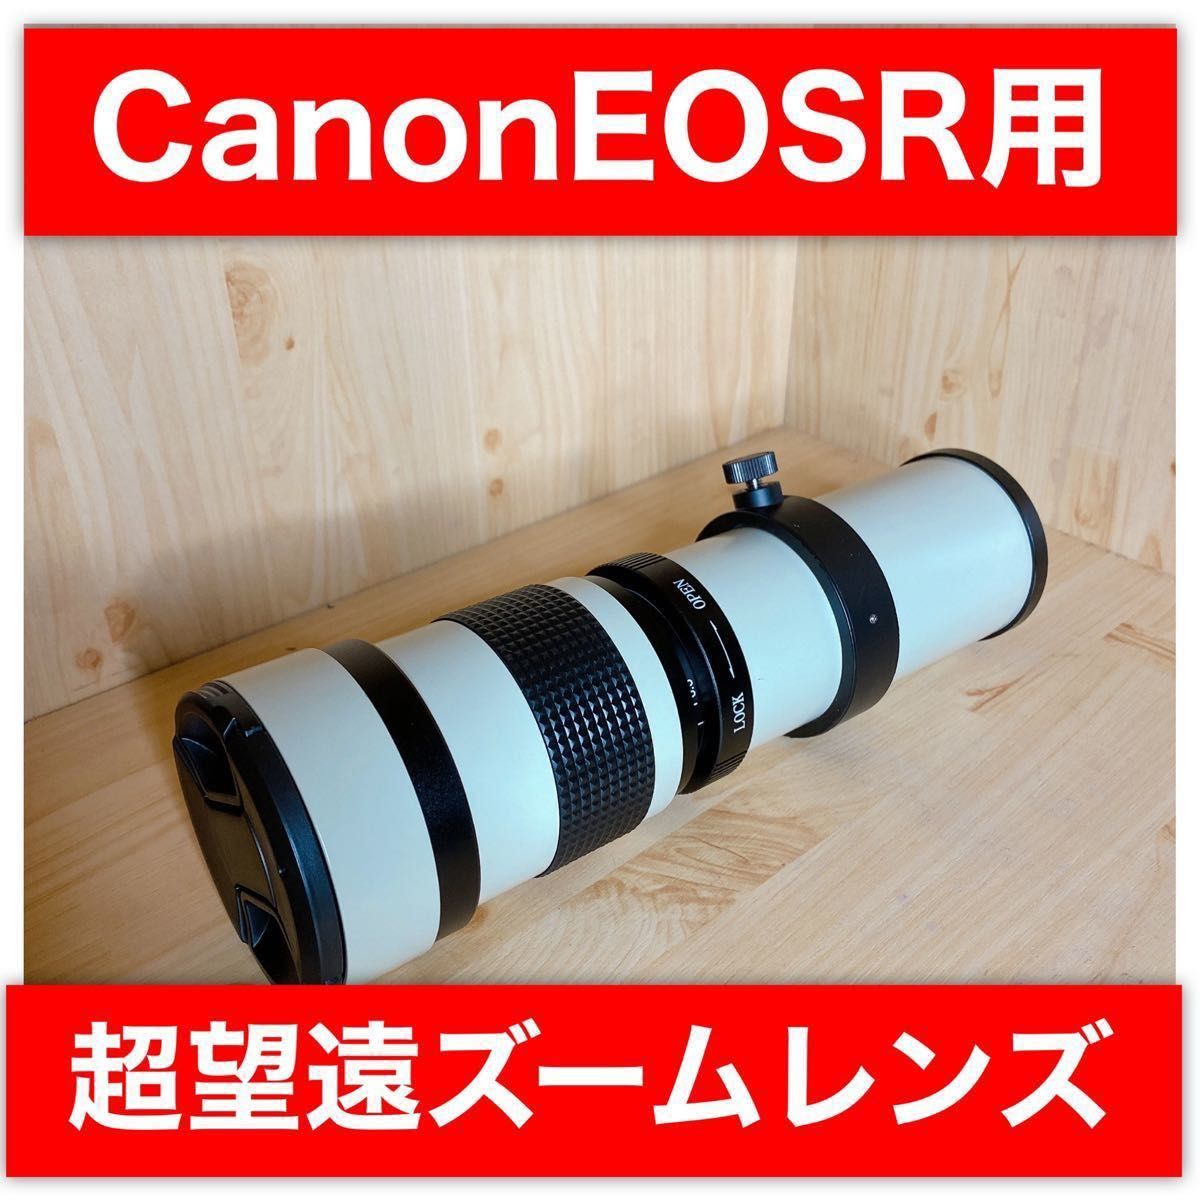 Canon EOSRシリーズ対応 望遠ズームレンズ スーパーズームレンズ 美品